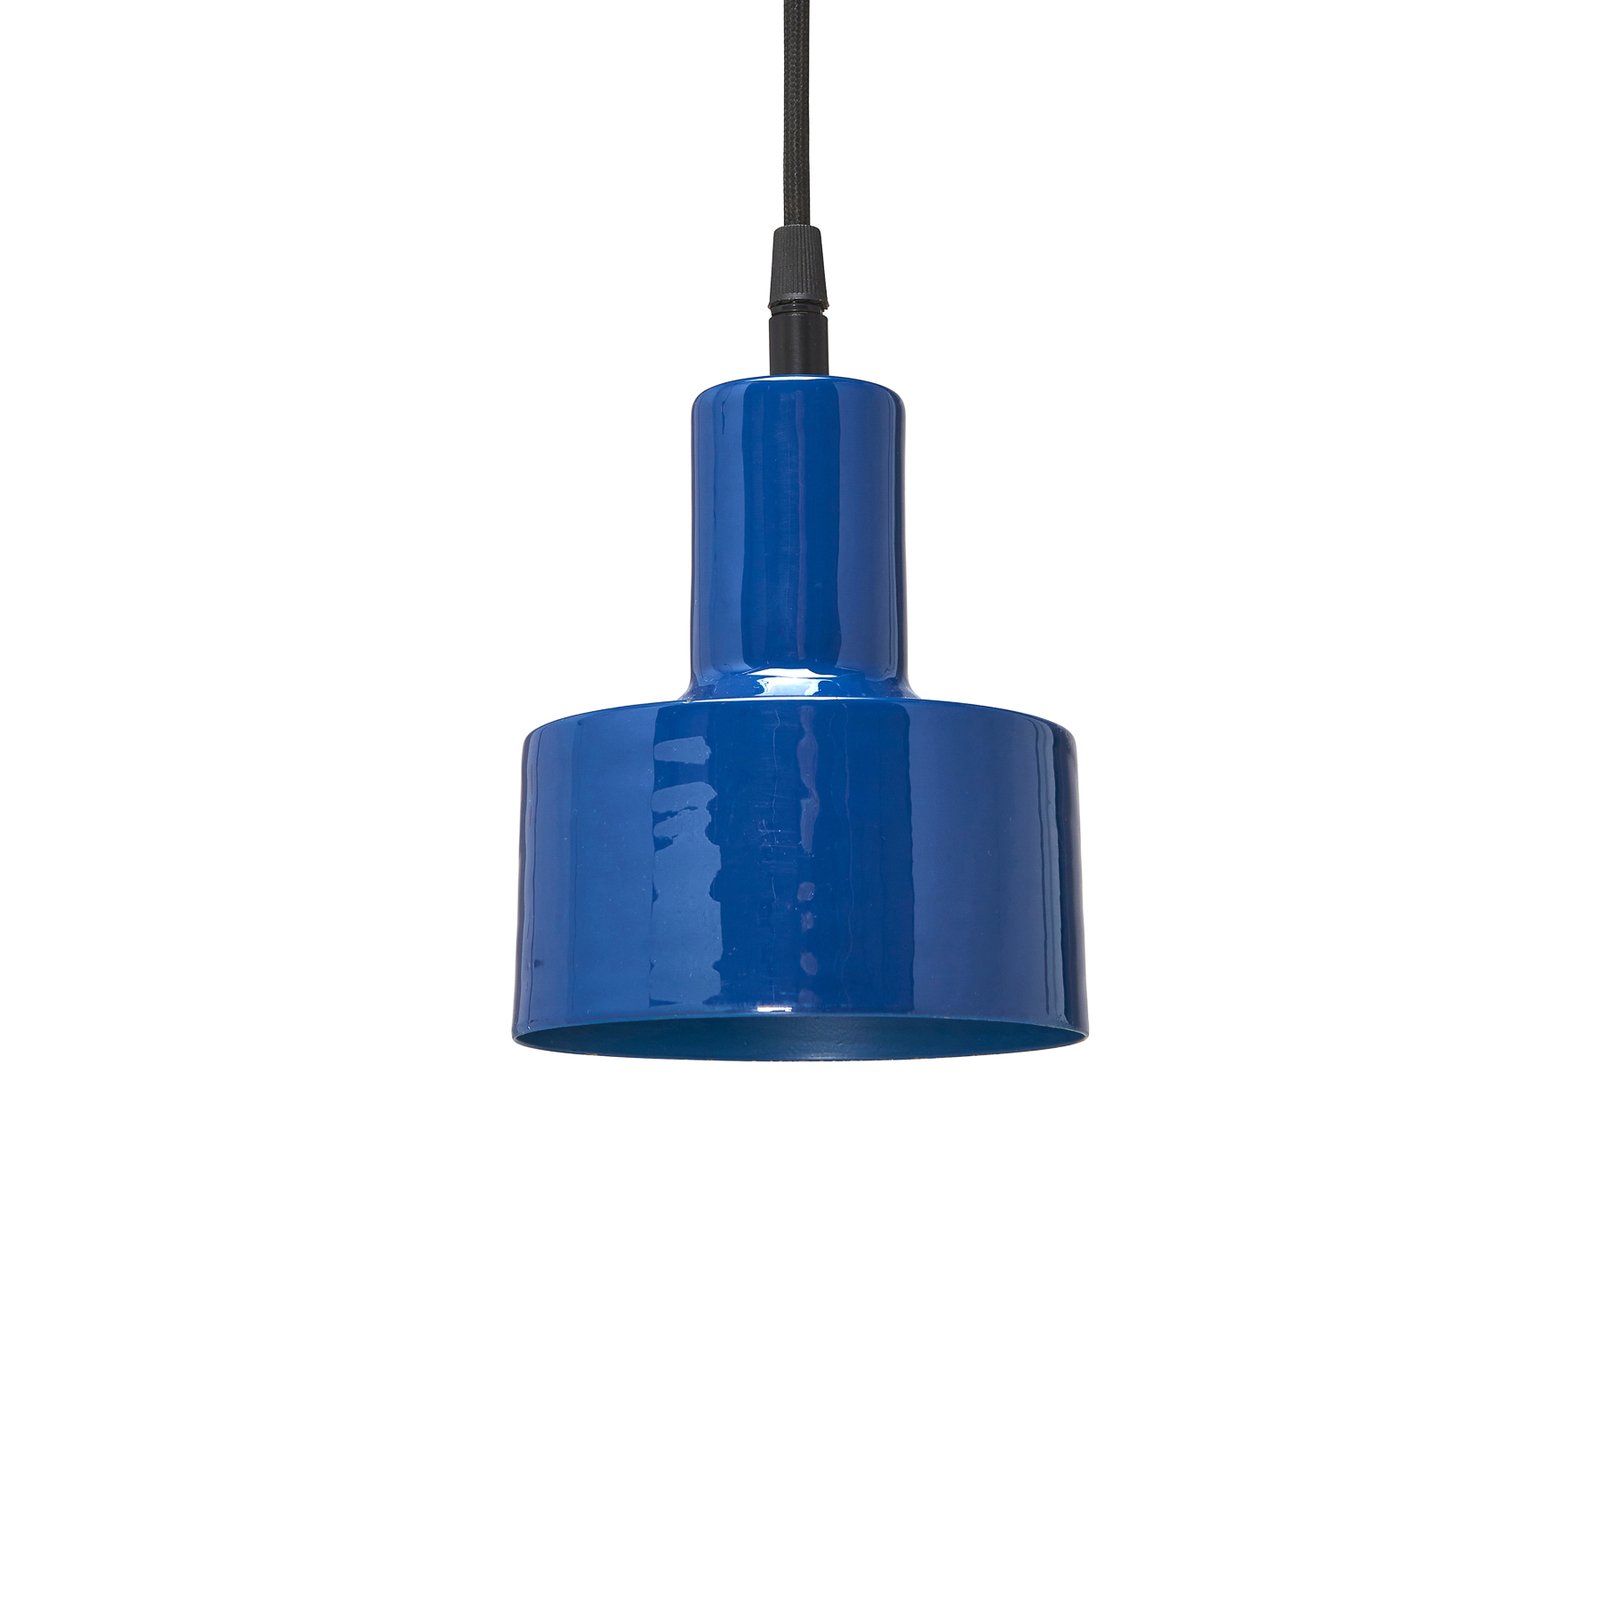 PR Home Solo Small hanglamp Ø 13 cm blauw